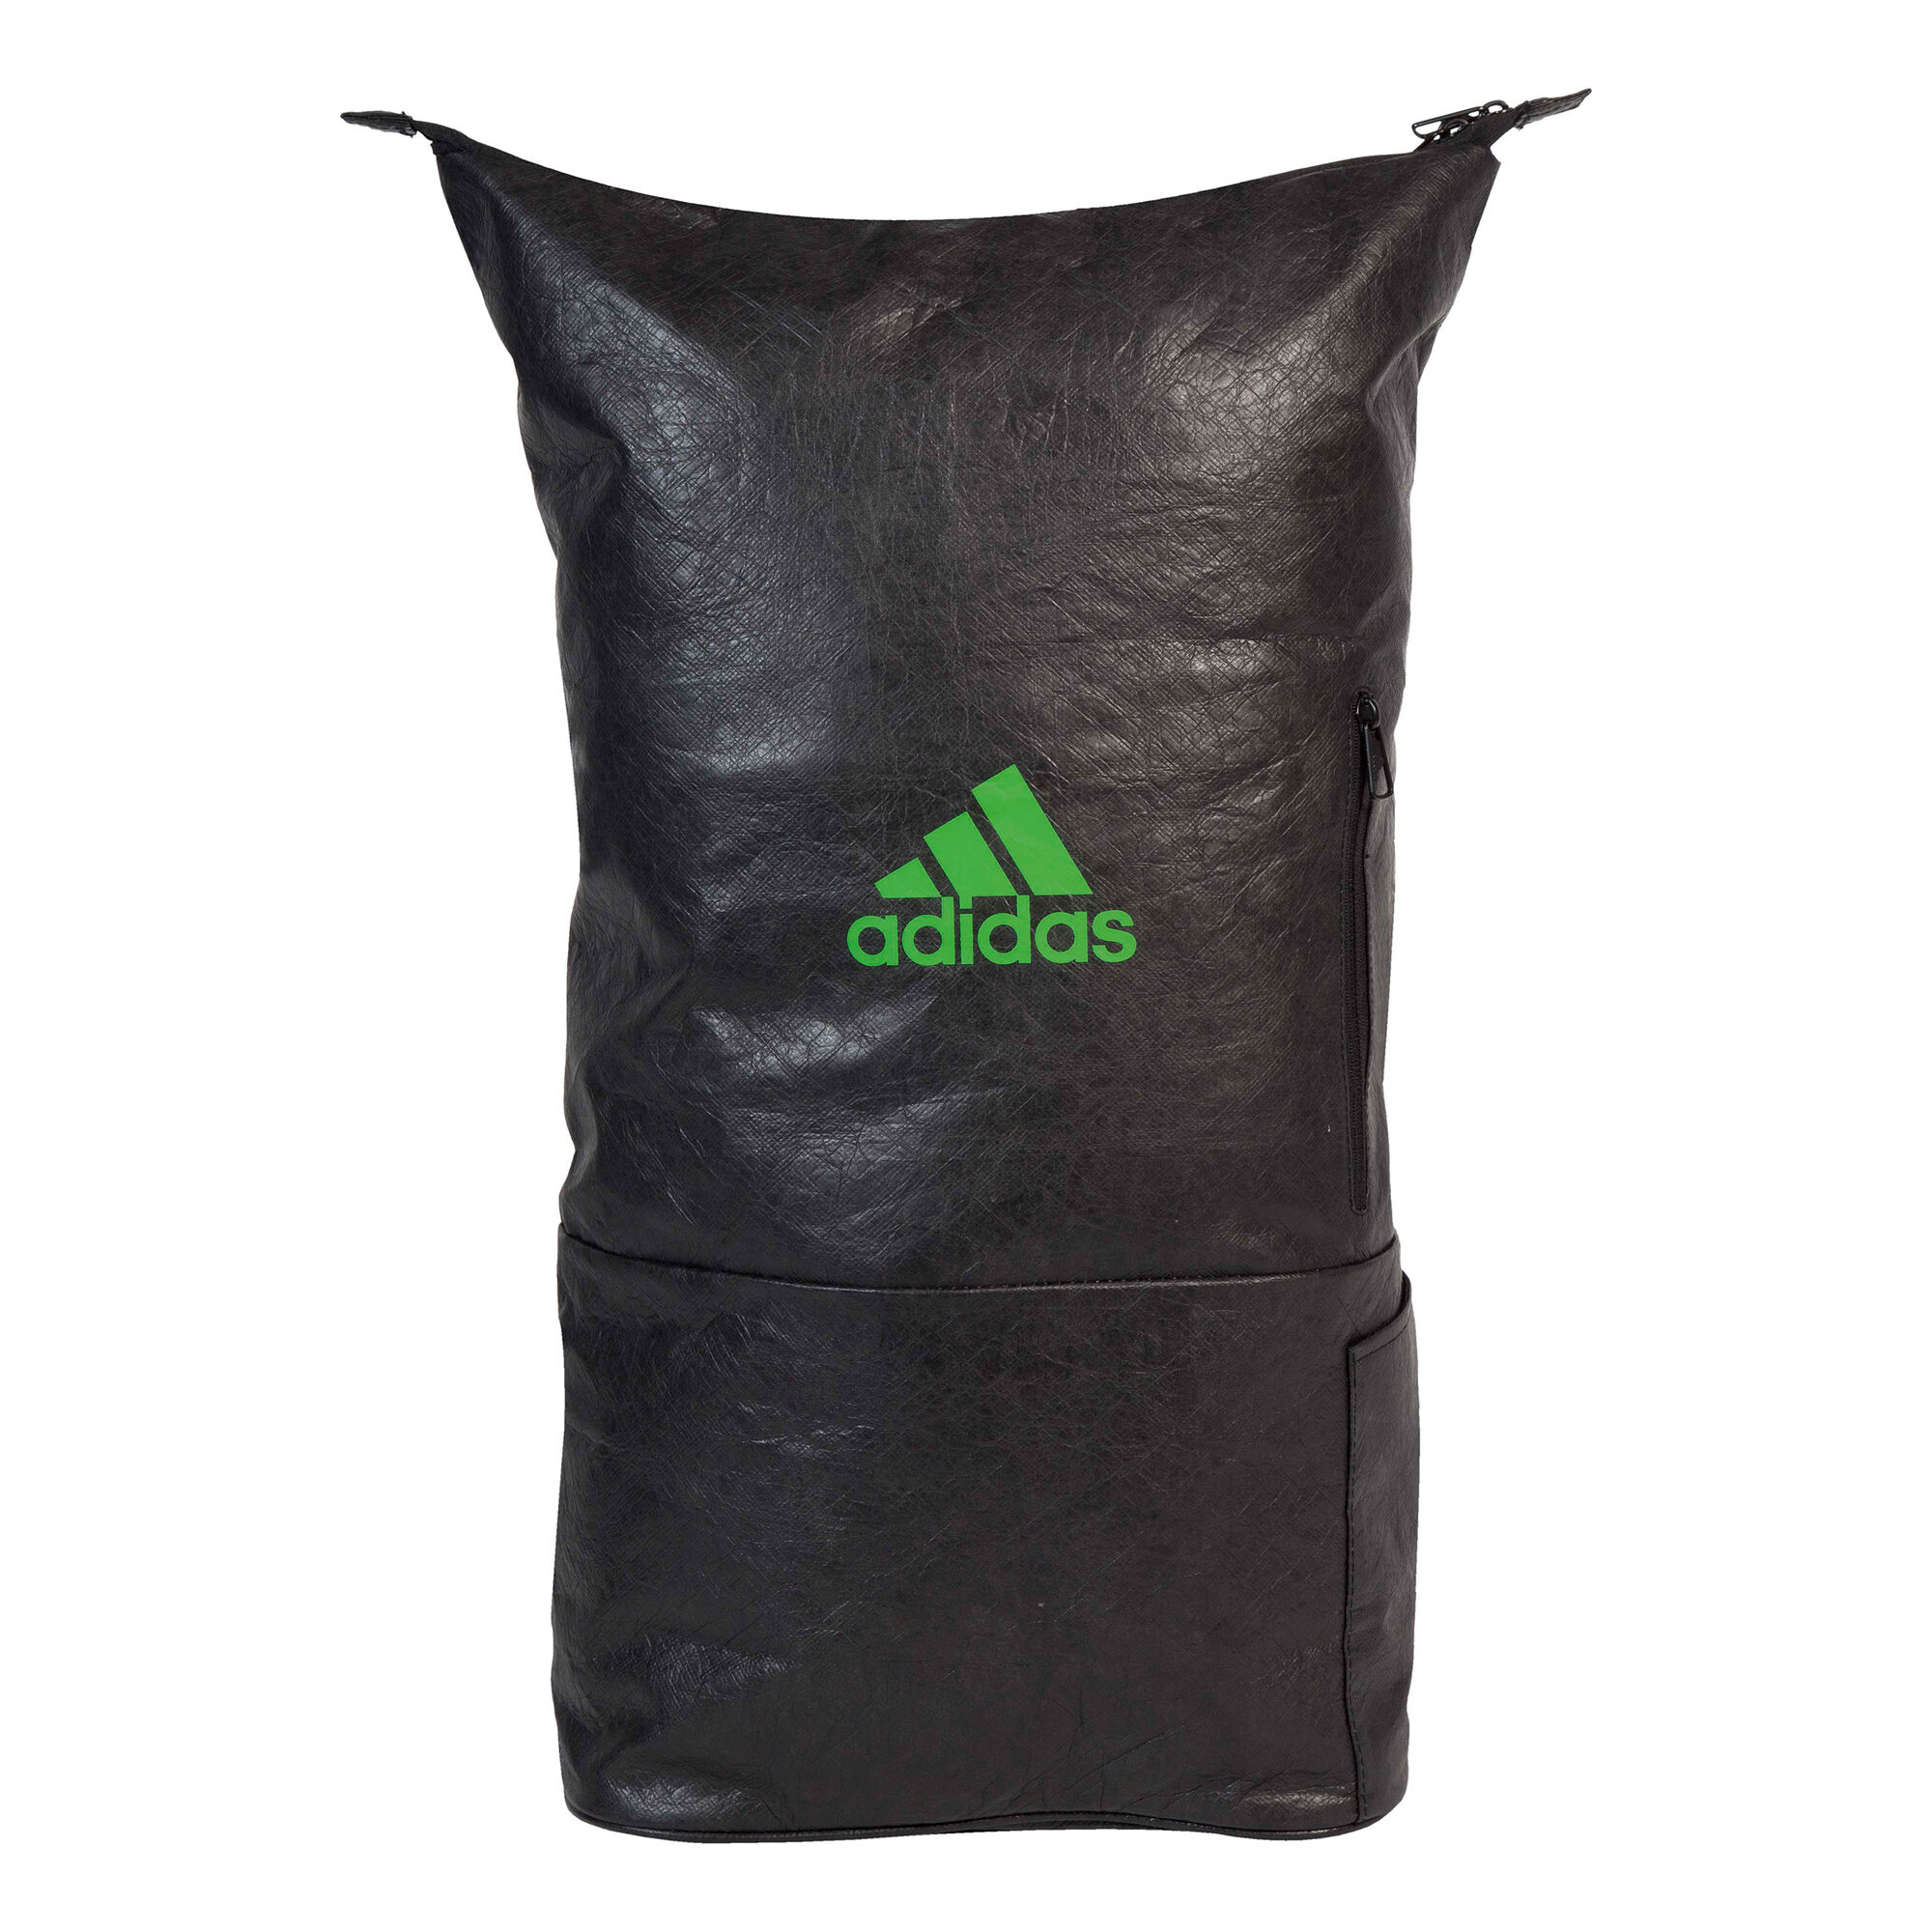 Adidas multigame back bag #green